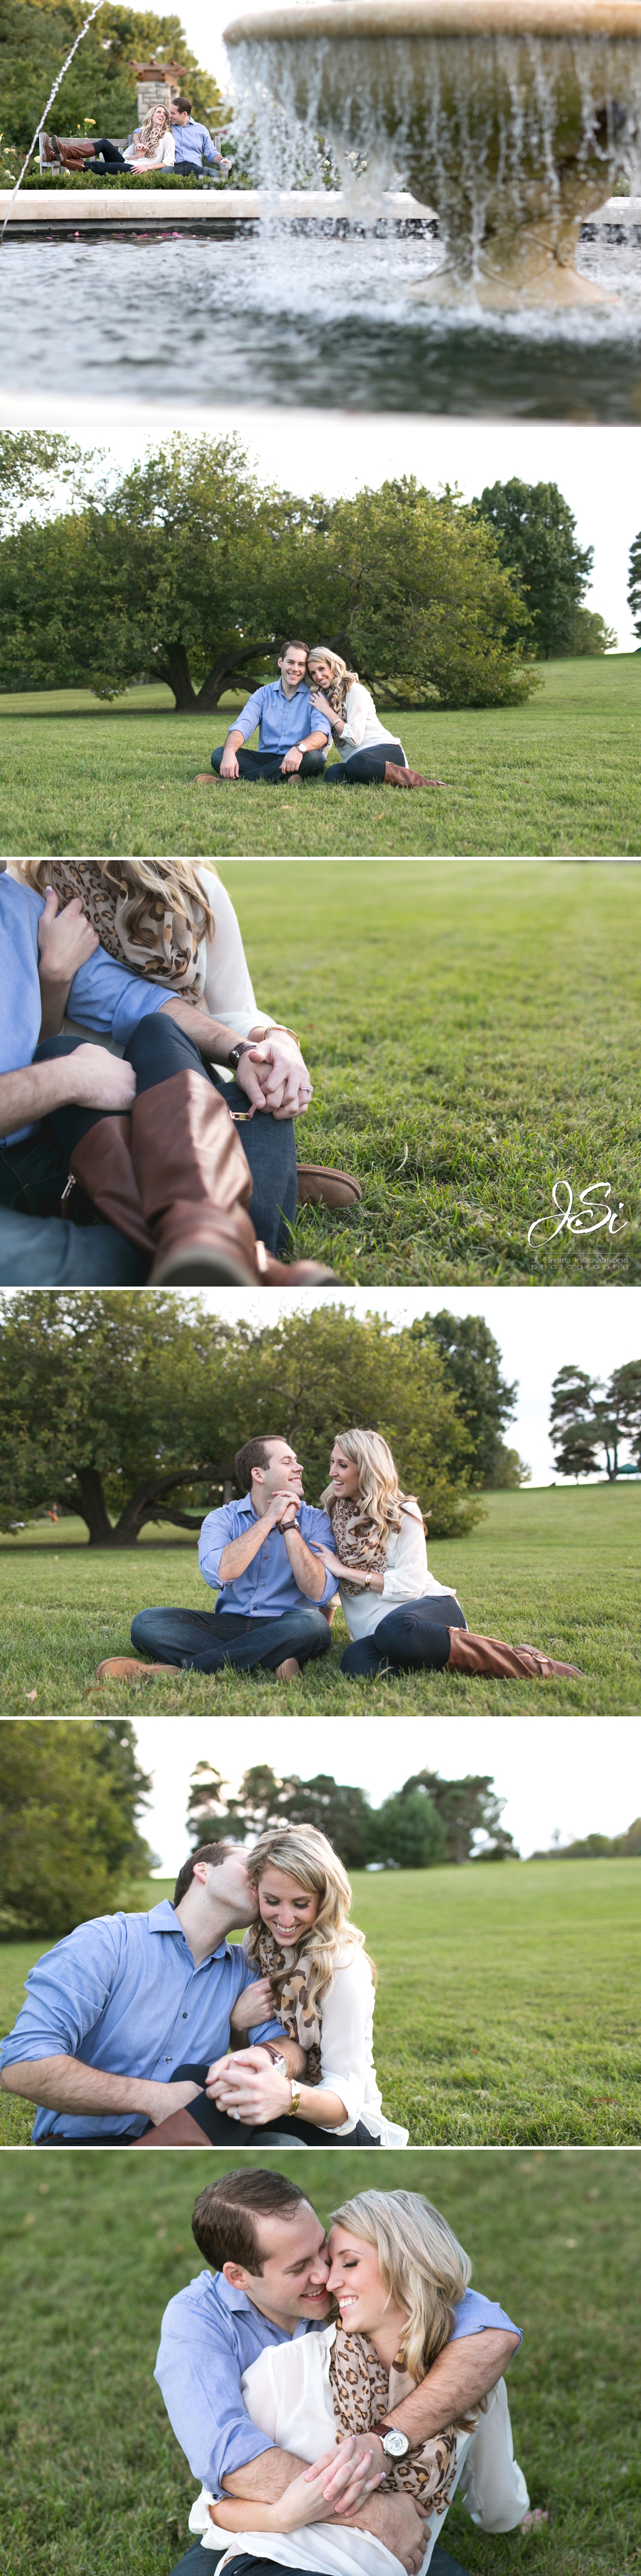 Kansas City Loose Park playful engagement session picture